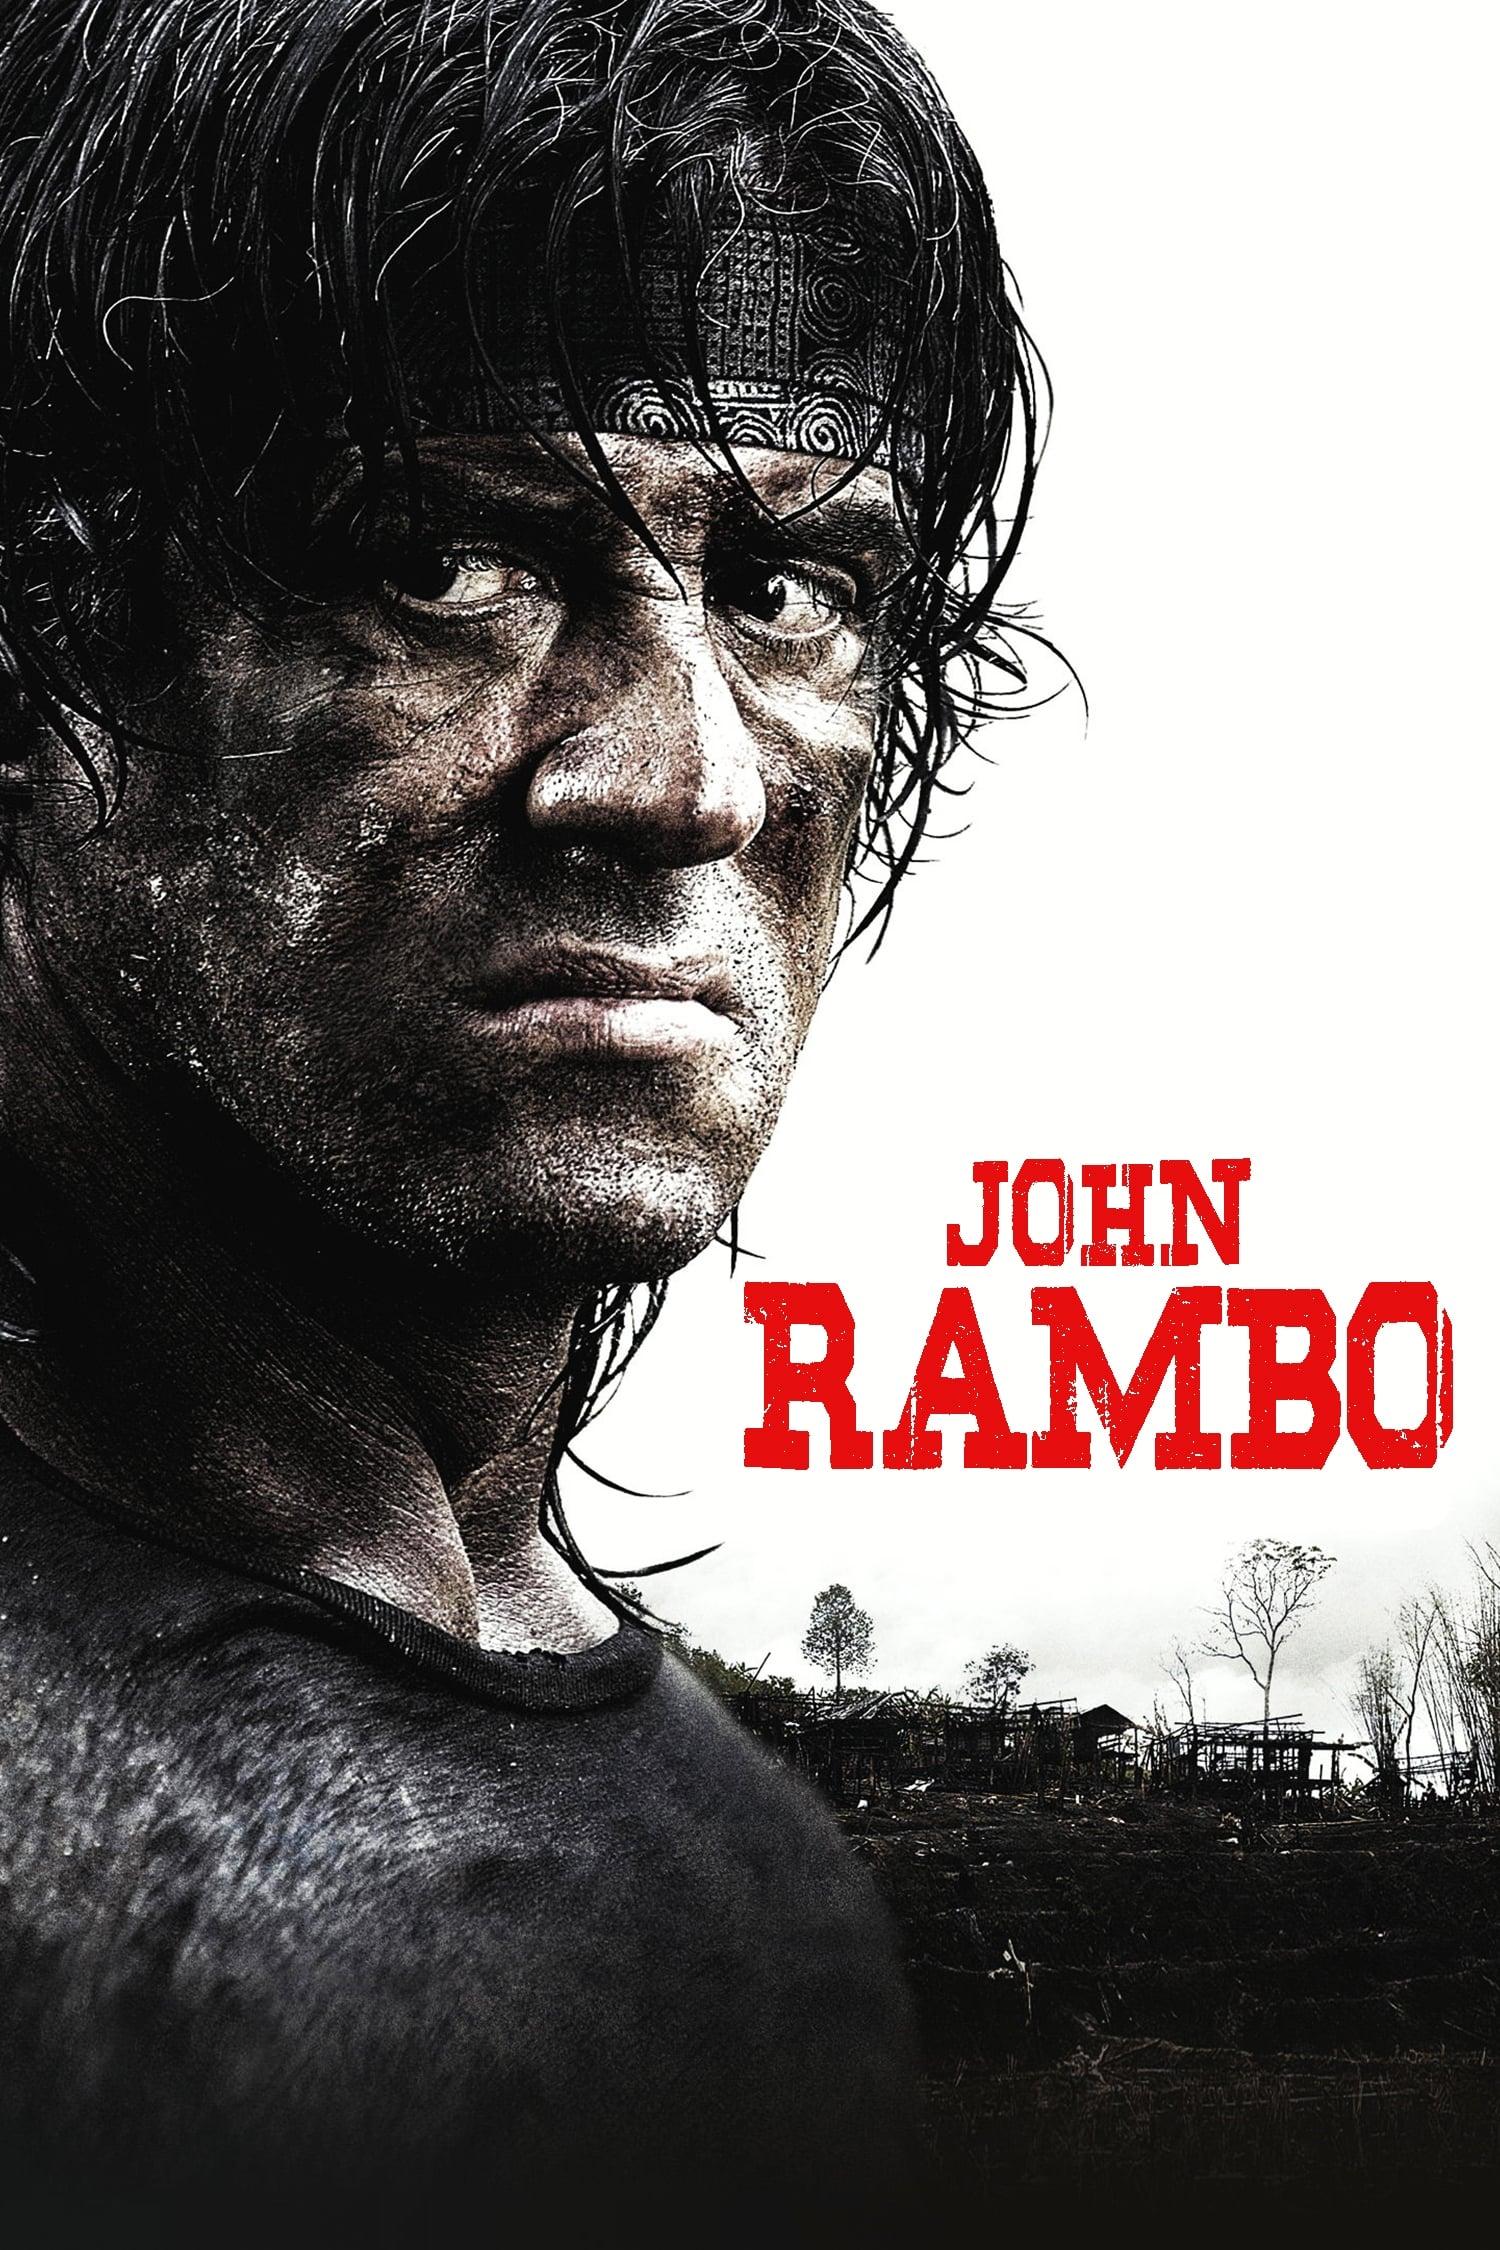 John Rambo poster